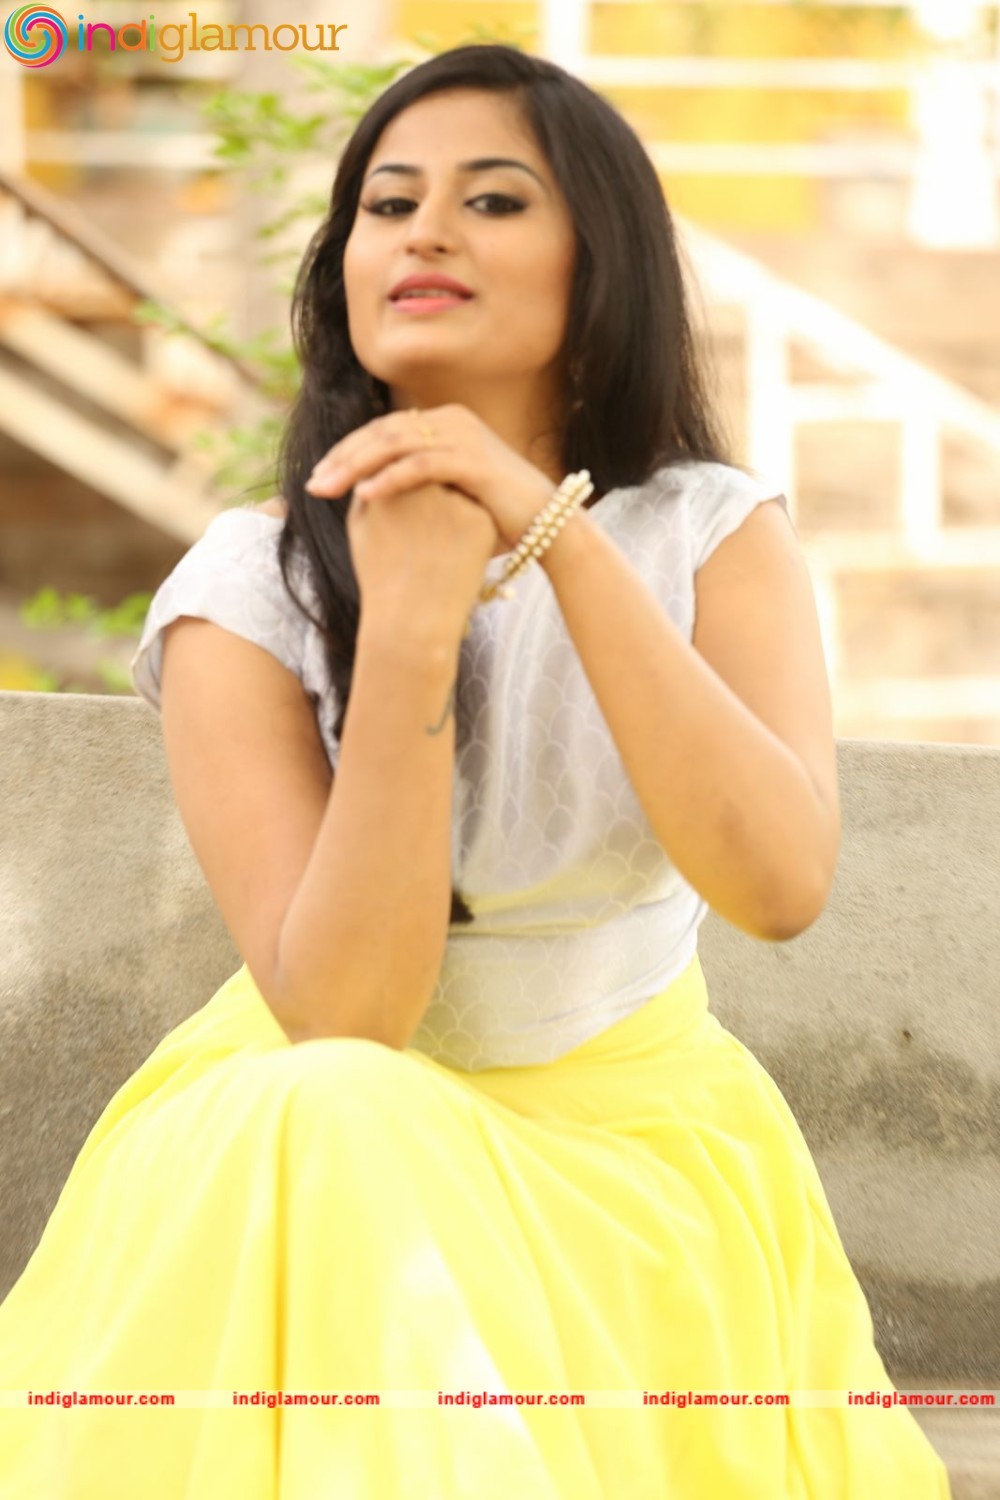 Ankitha Actress photo,image,pics and stills - # 420447